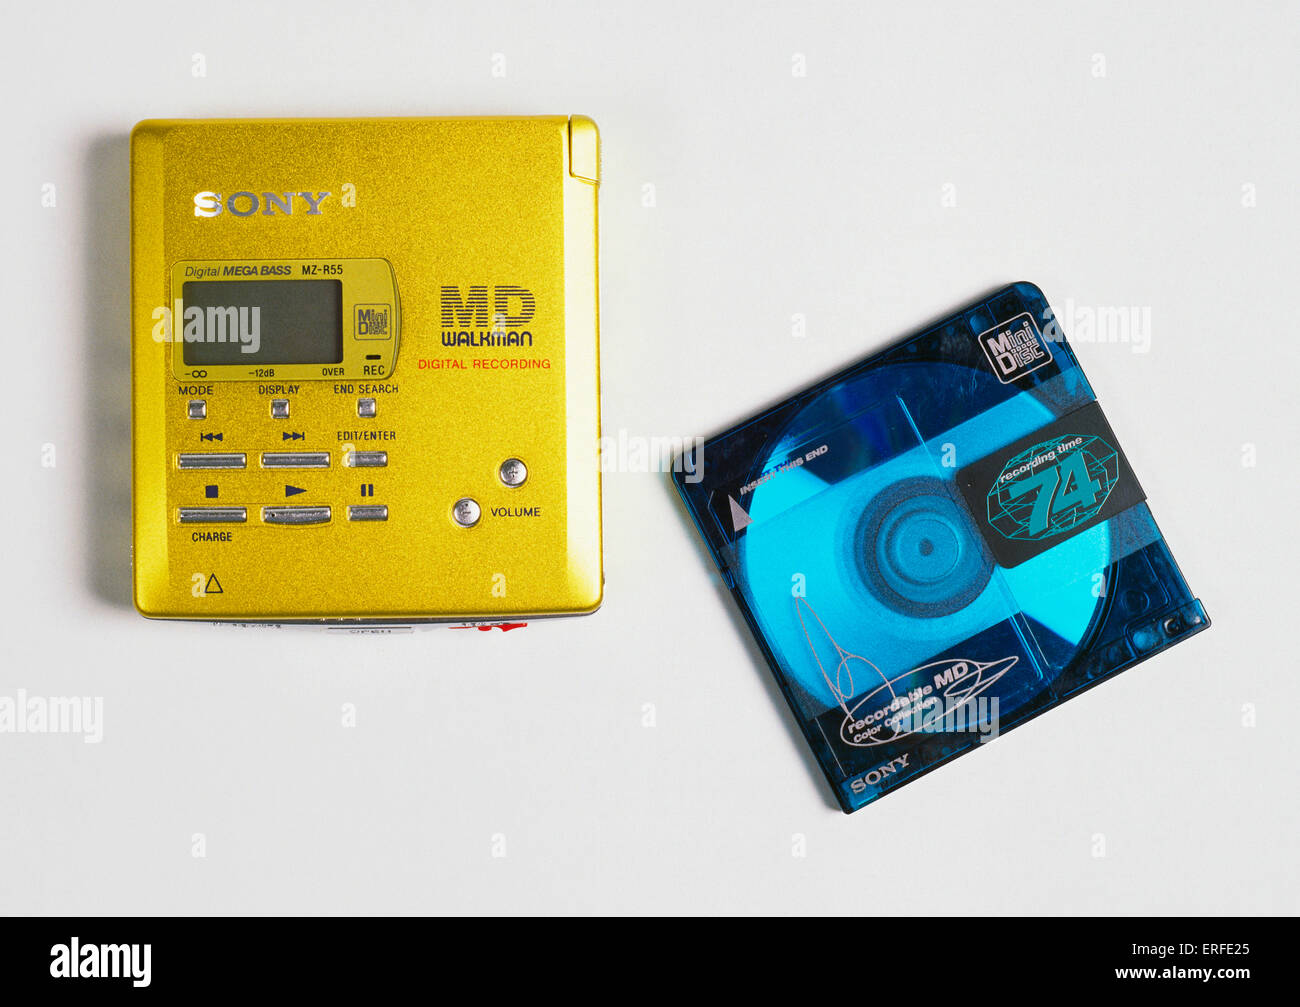 sony-minidisc-player-with-minidisc-portable-music-player-ERFE25.jpg